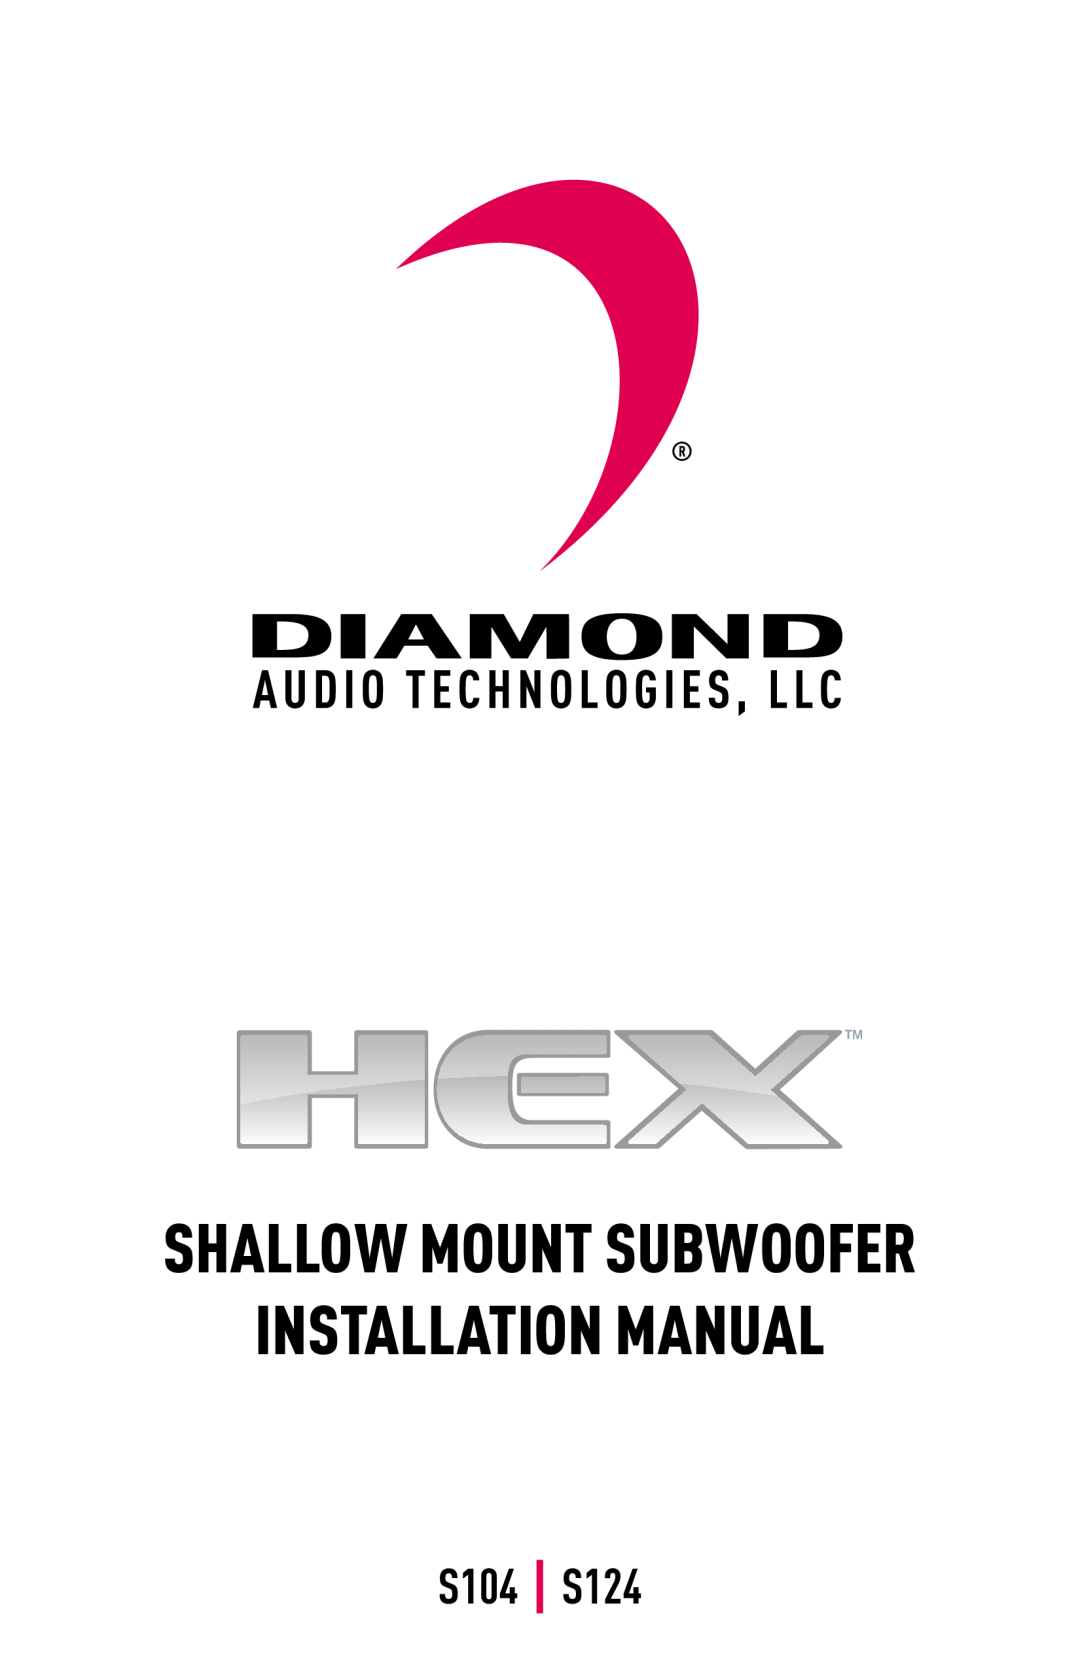 Diamond Audio Technology installation manual Installation Manual, Shallow Mount Subwoofer, S104 S124 